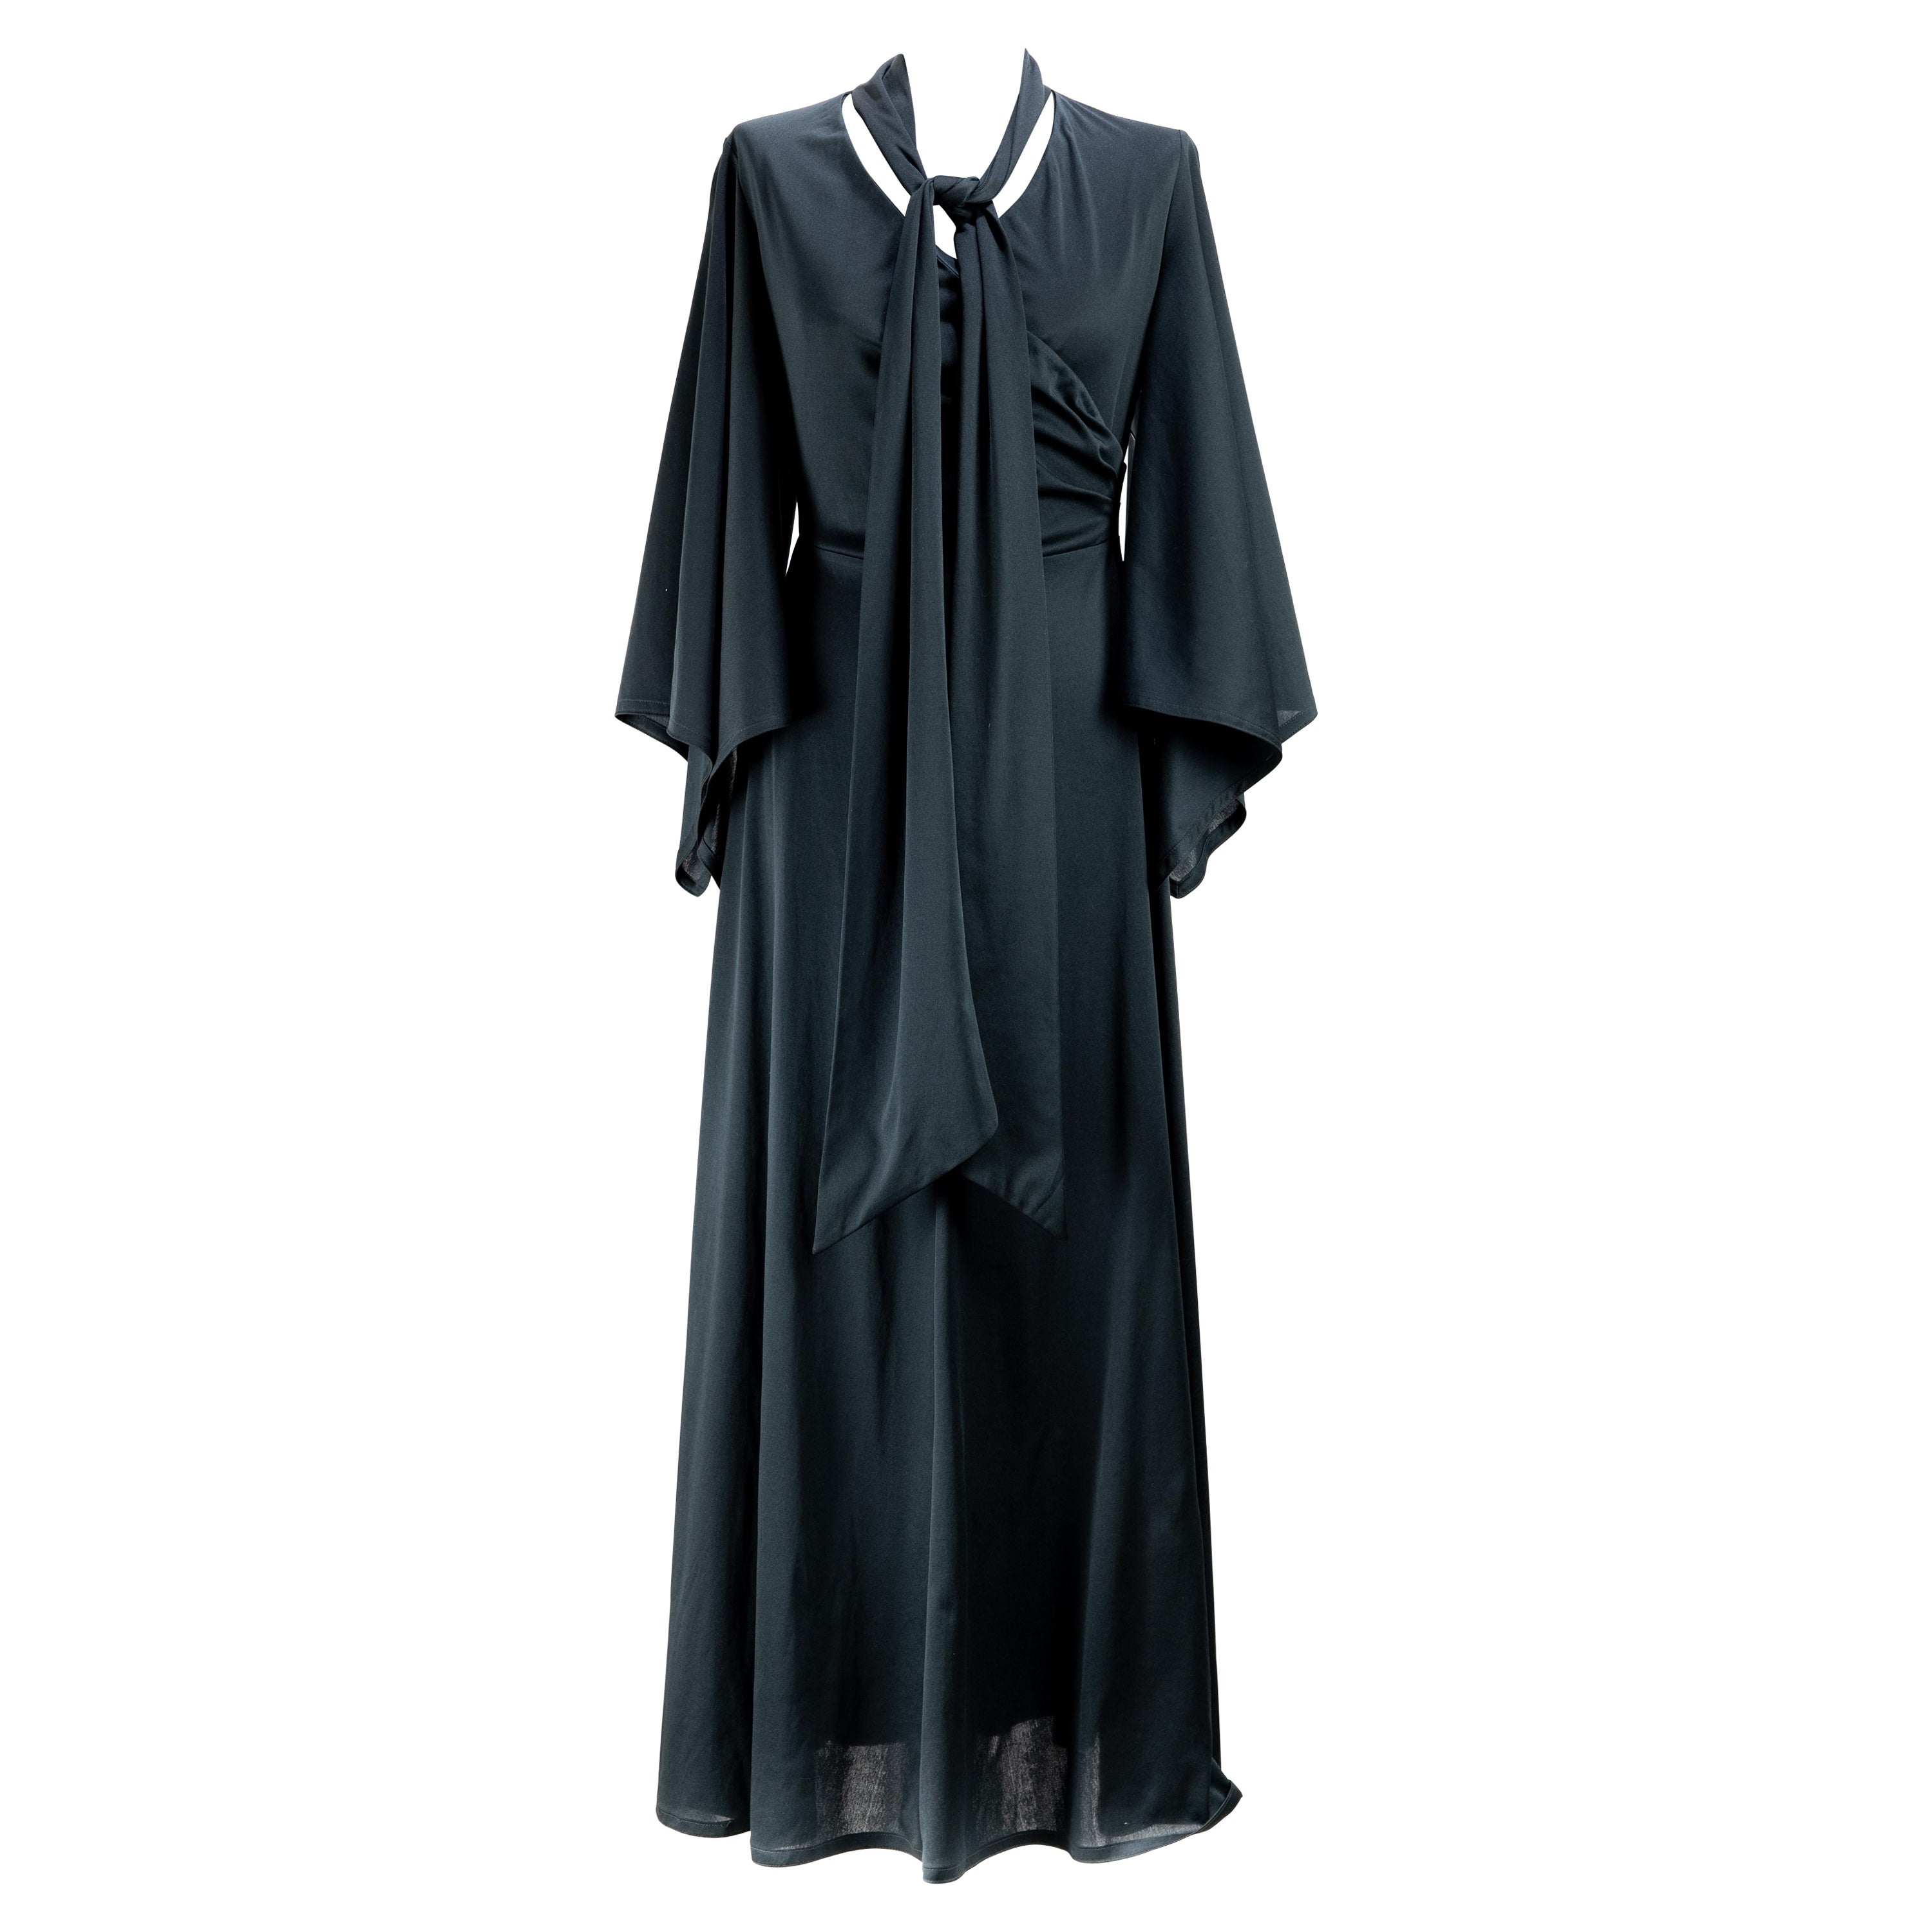 Jacques Heim black long dress